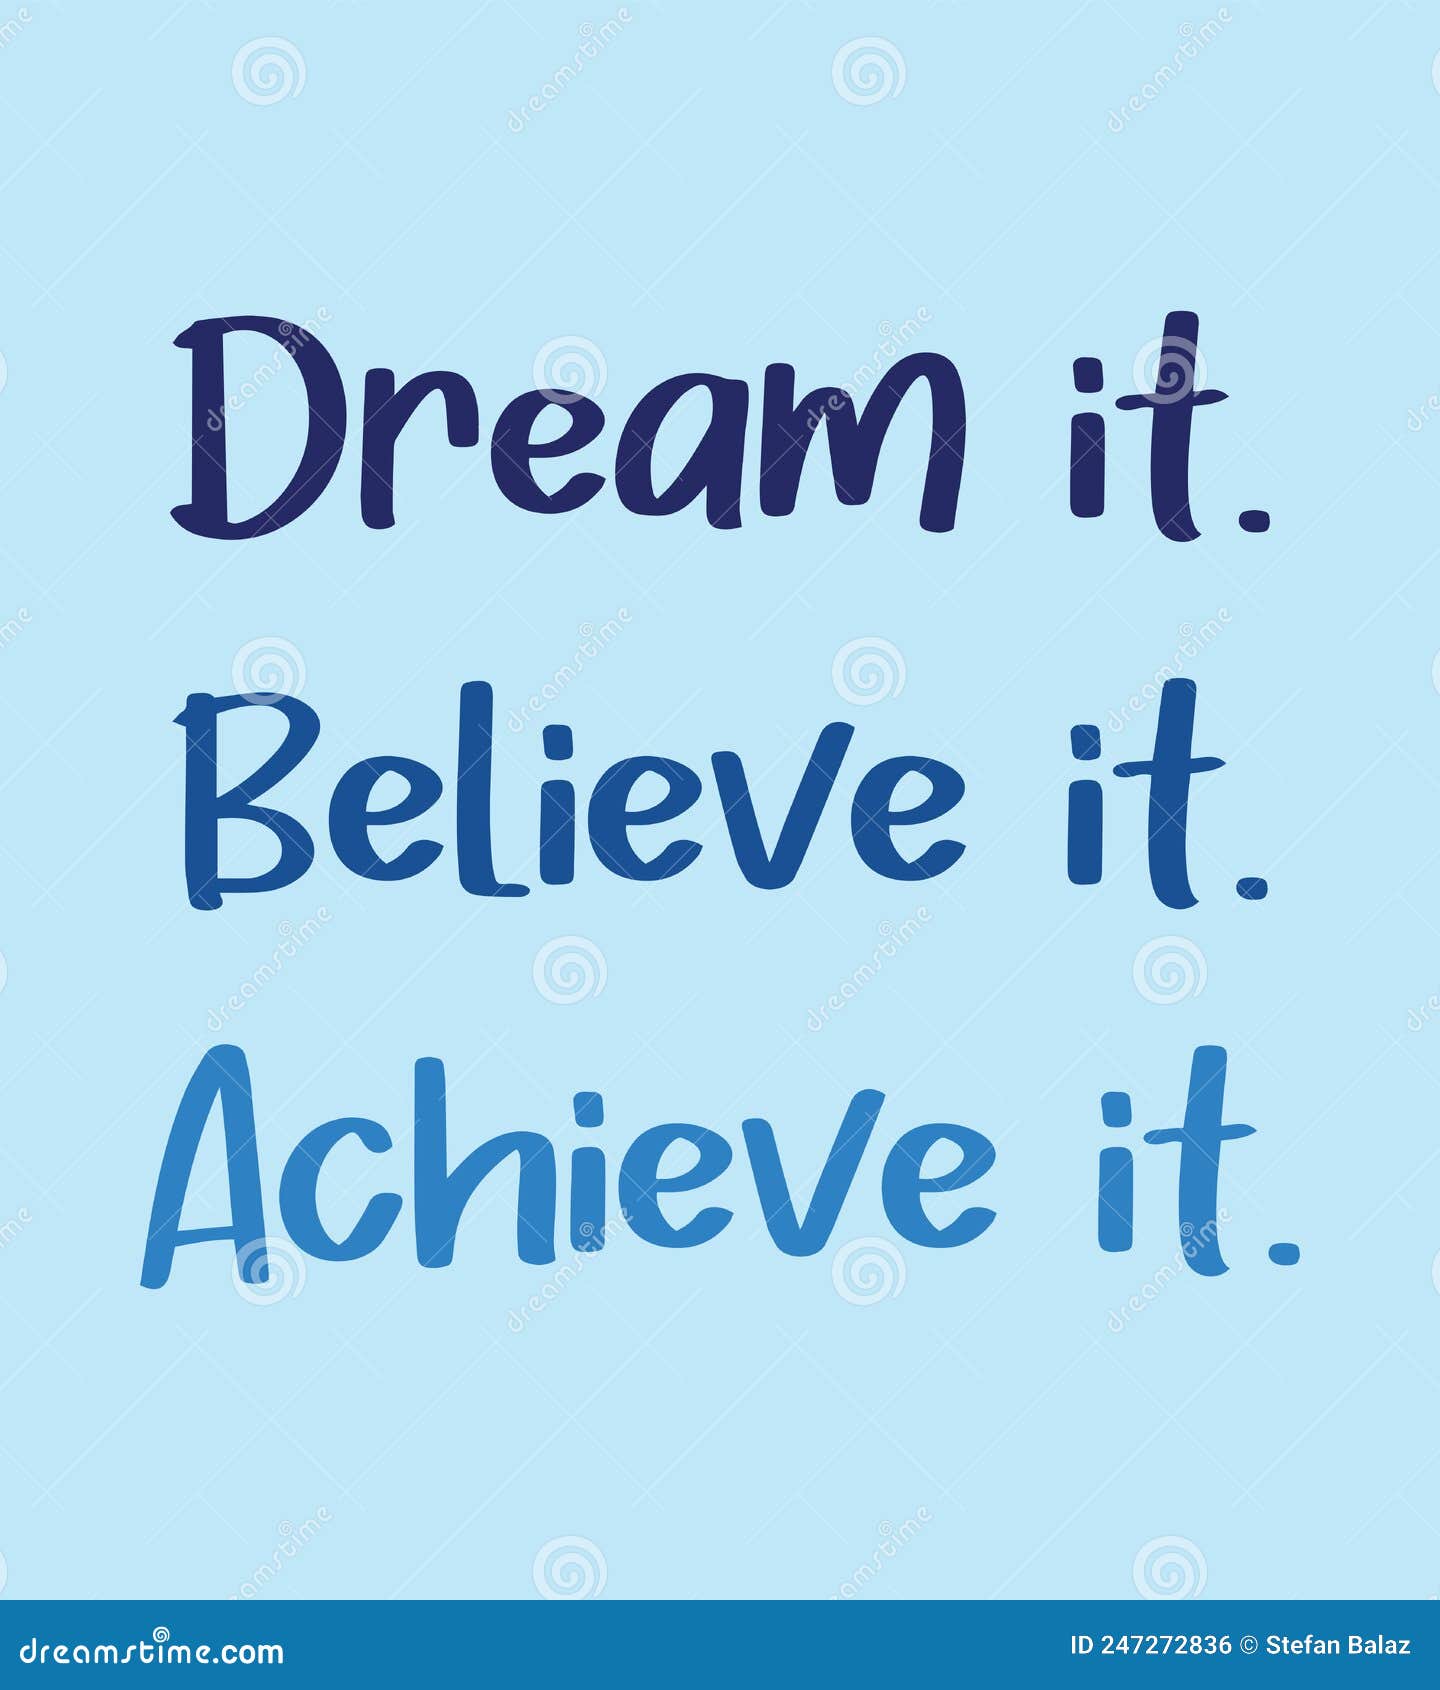 https://thumbs.dreamstime.com/z/dream-believe-achieve-motivation-quotes-inspirational-quote-blue-background-vector-business-motivation-sports-247272836.jpg